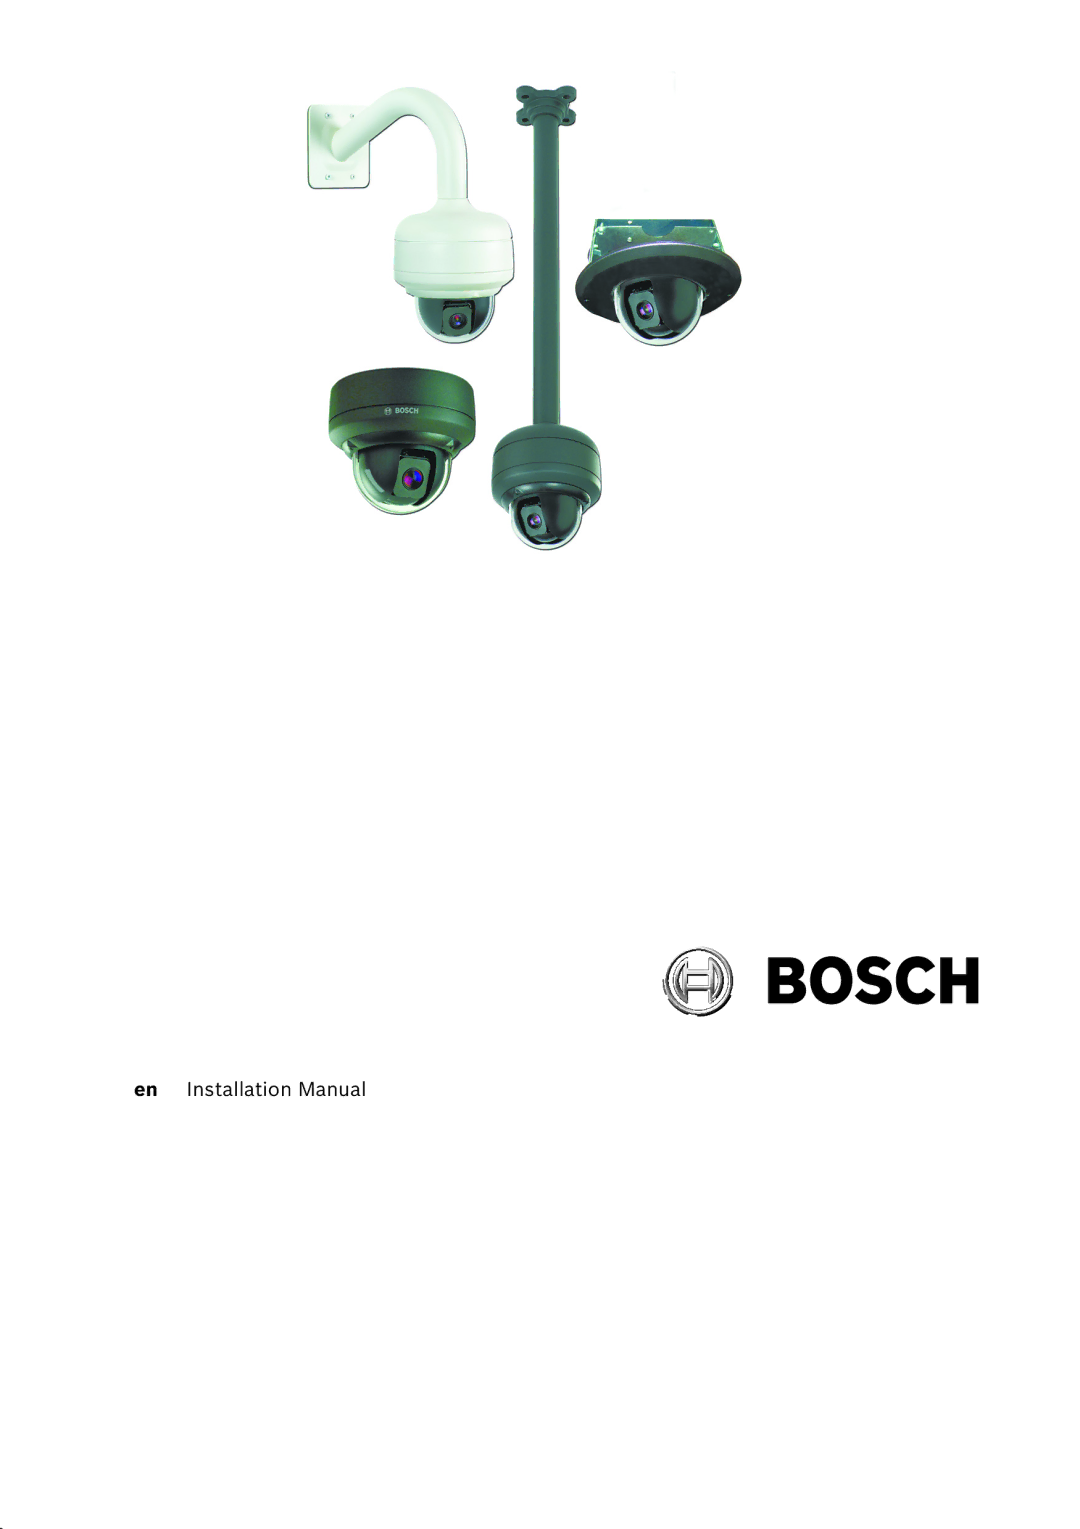 Bosch Appliances VEZ installation manual 